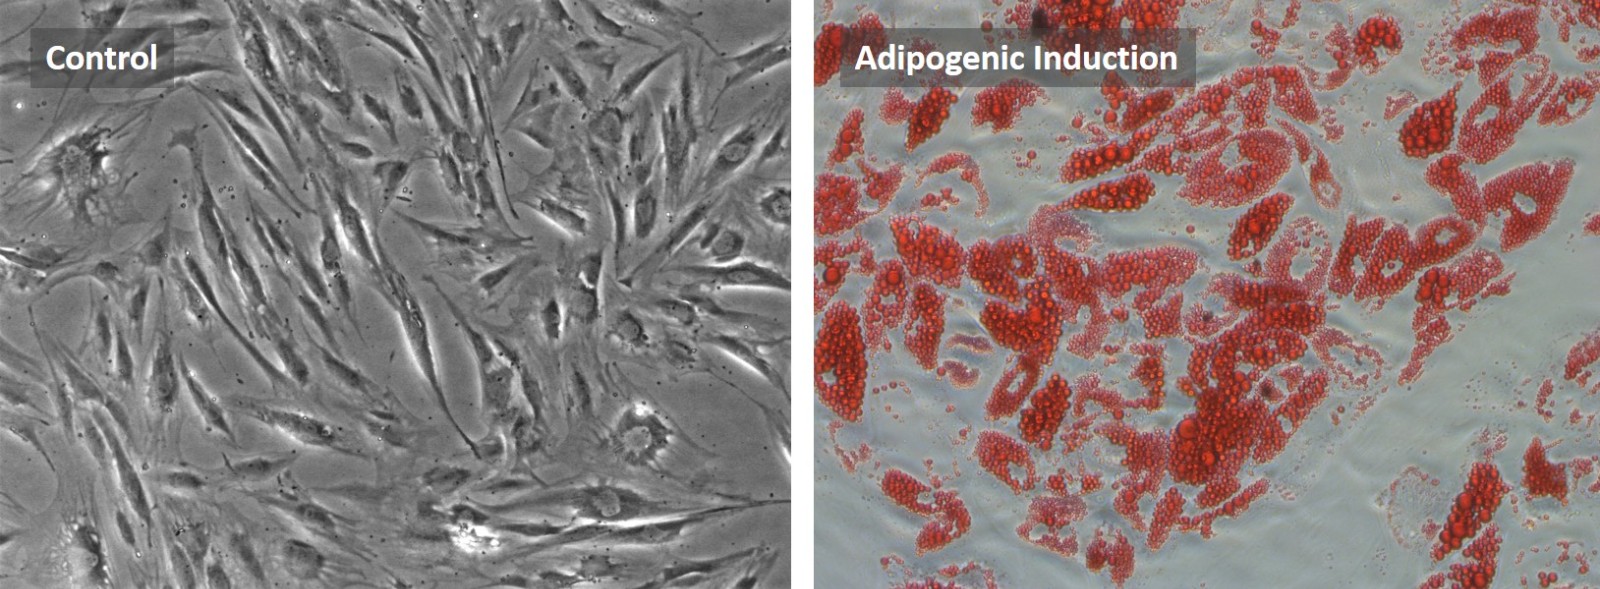 Human ADSC adipocyte differentiation.jpg